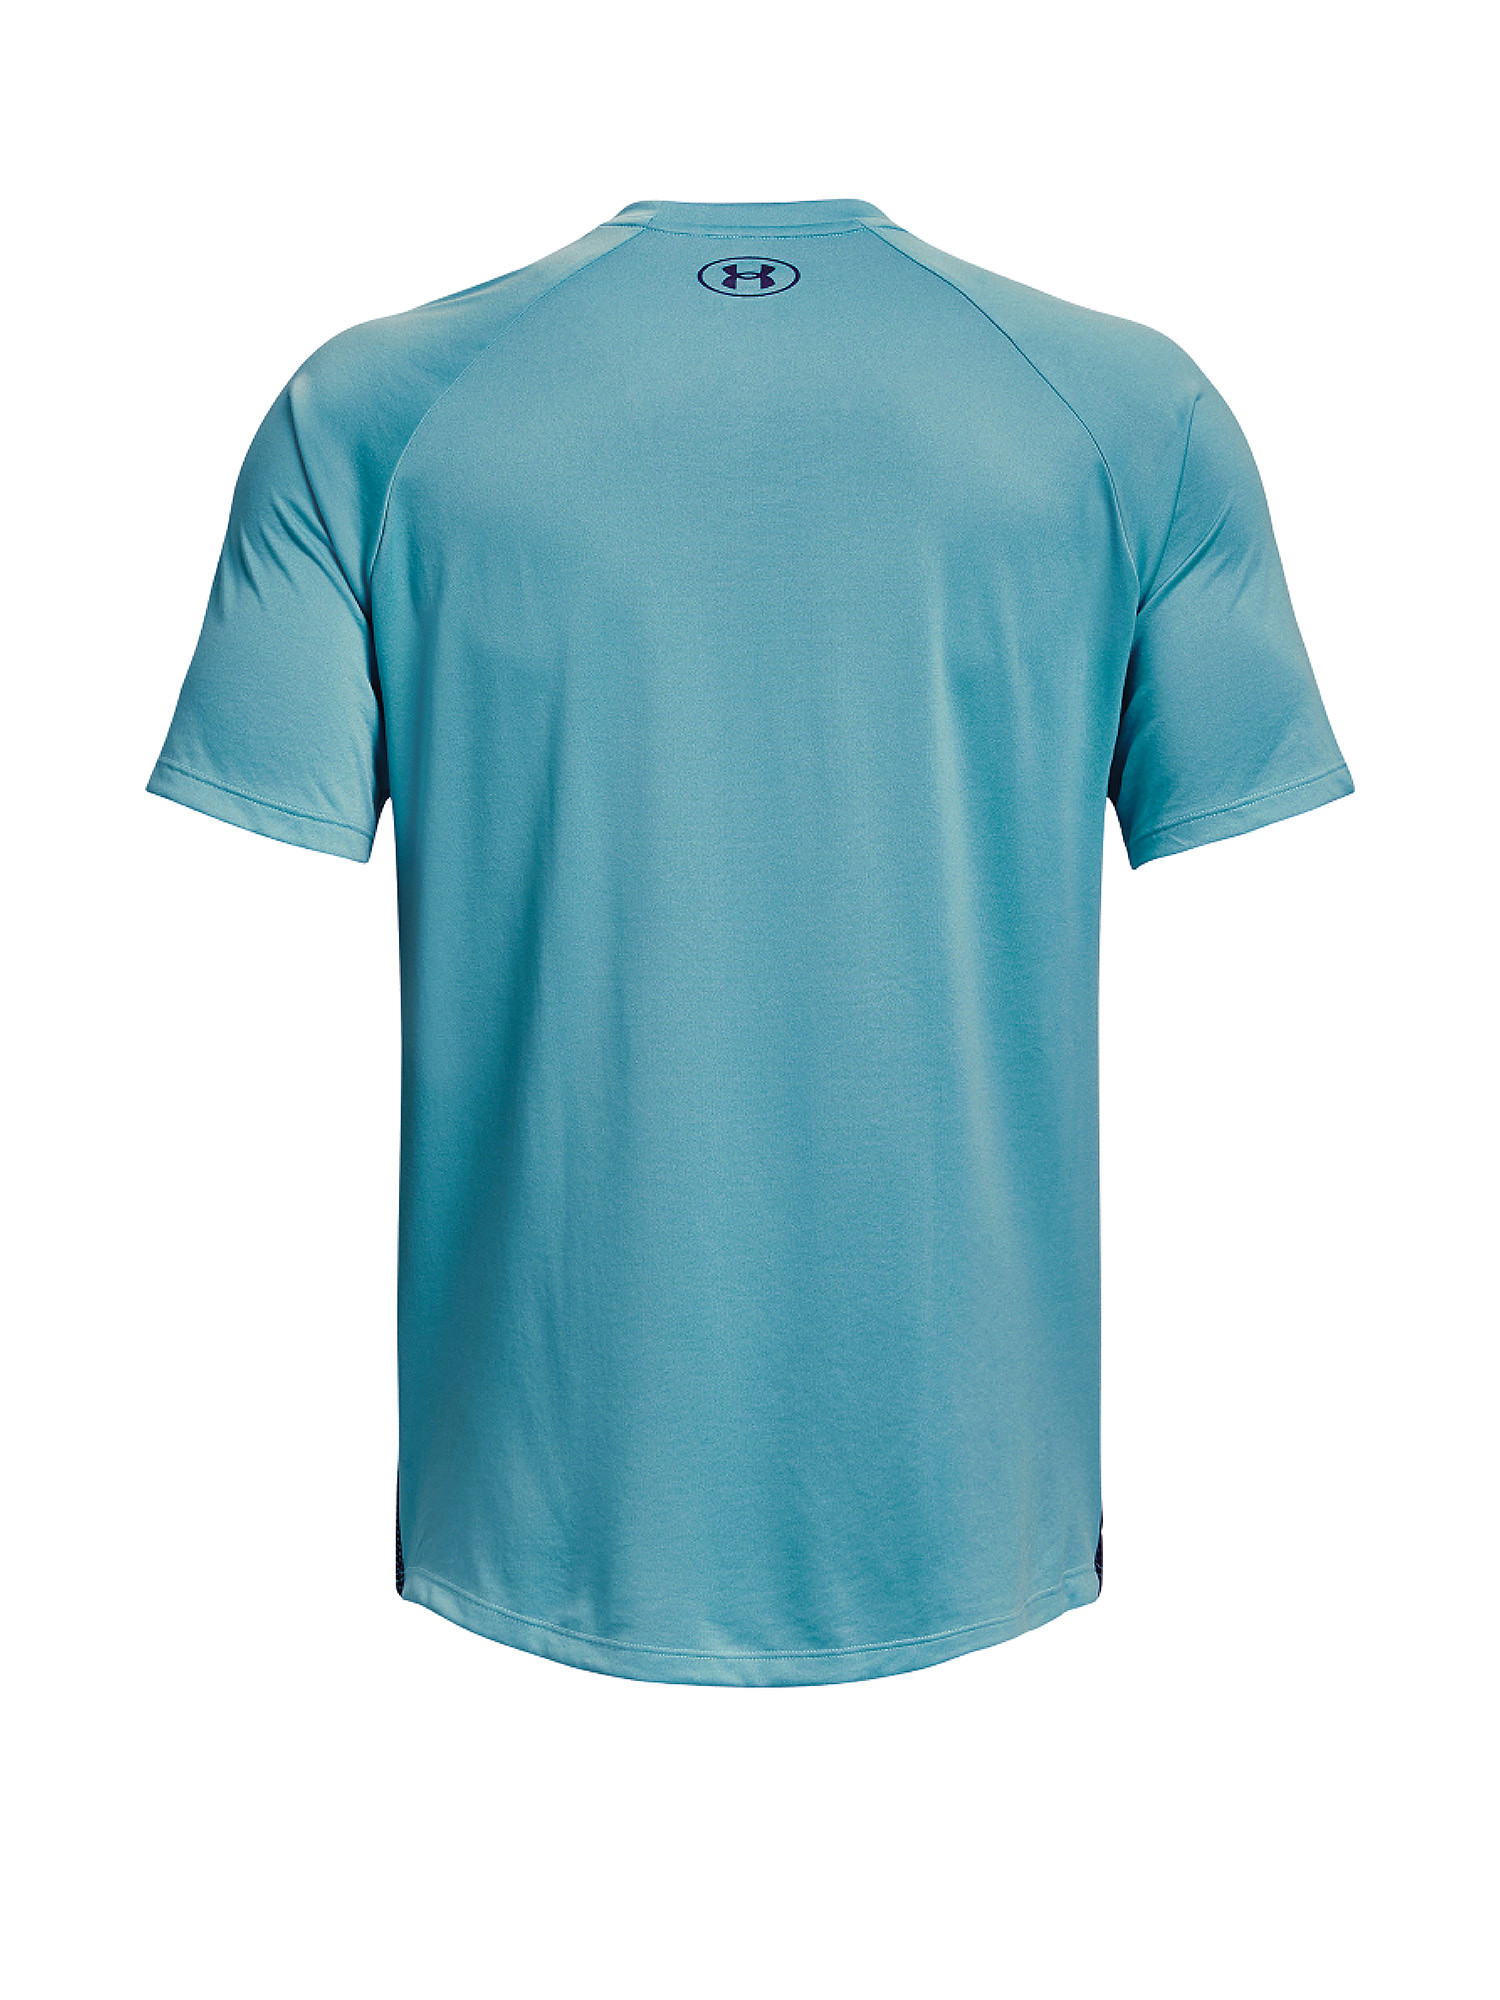 Under Armour - UA Tech™ Fade Short Sleeve T-Shirt, Light Blue, large image number 1